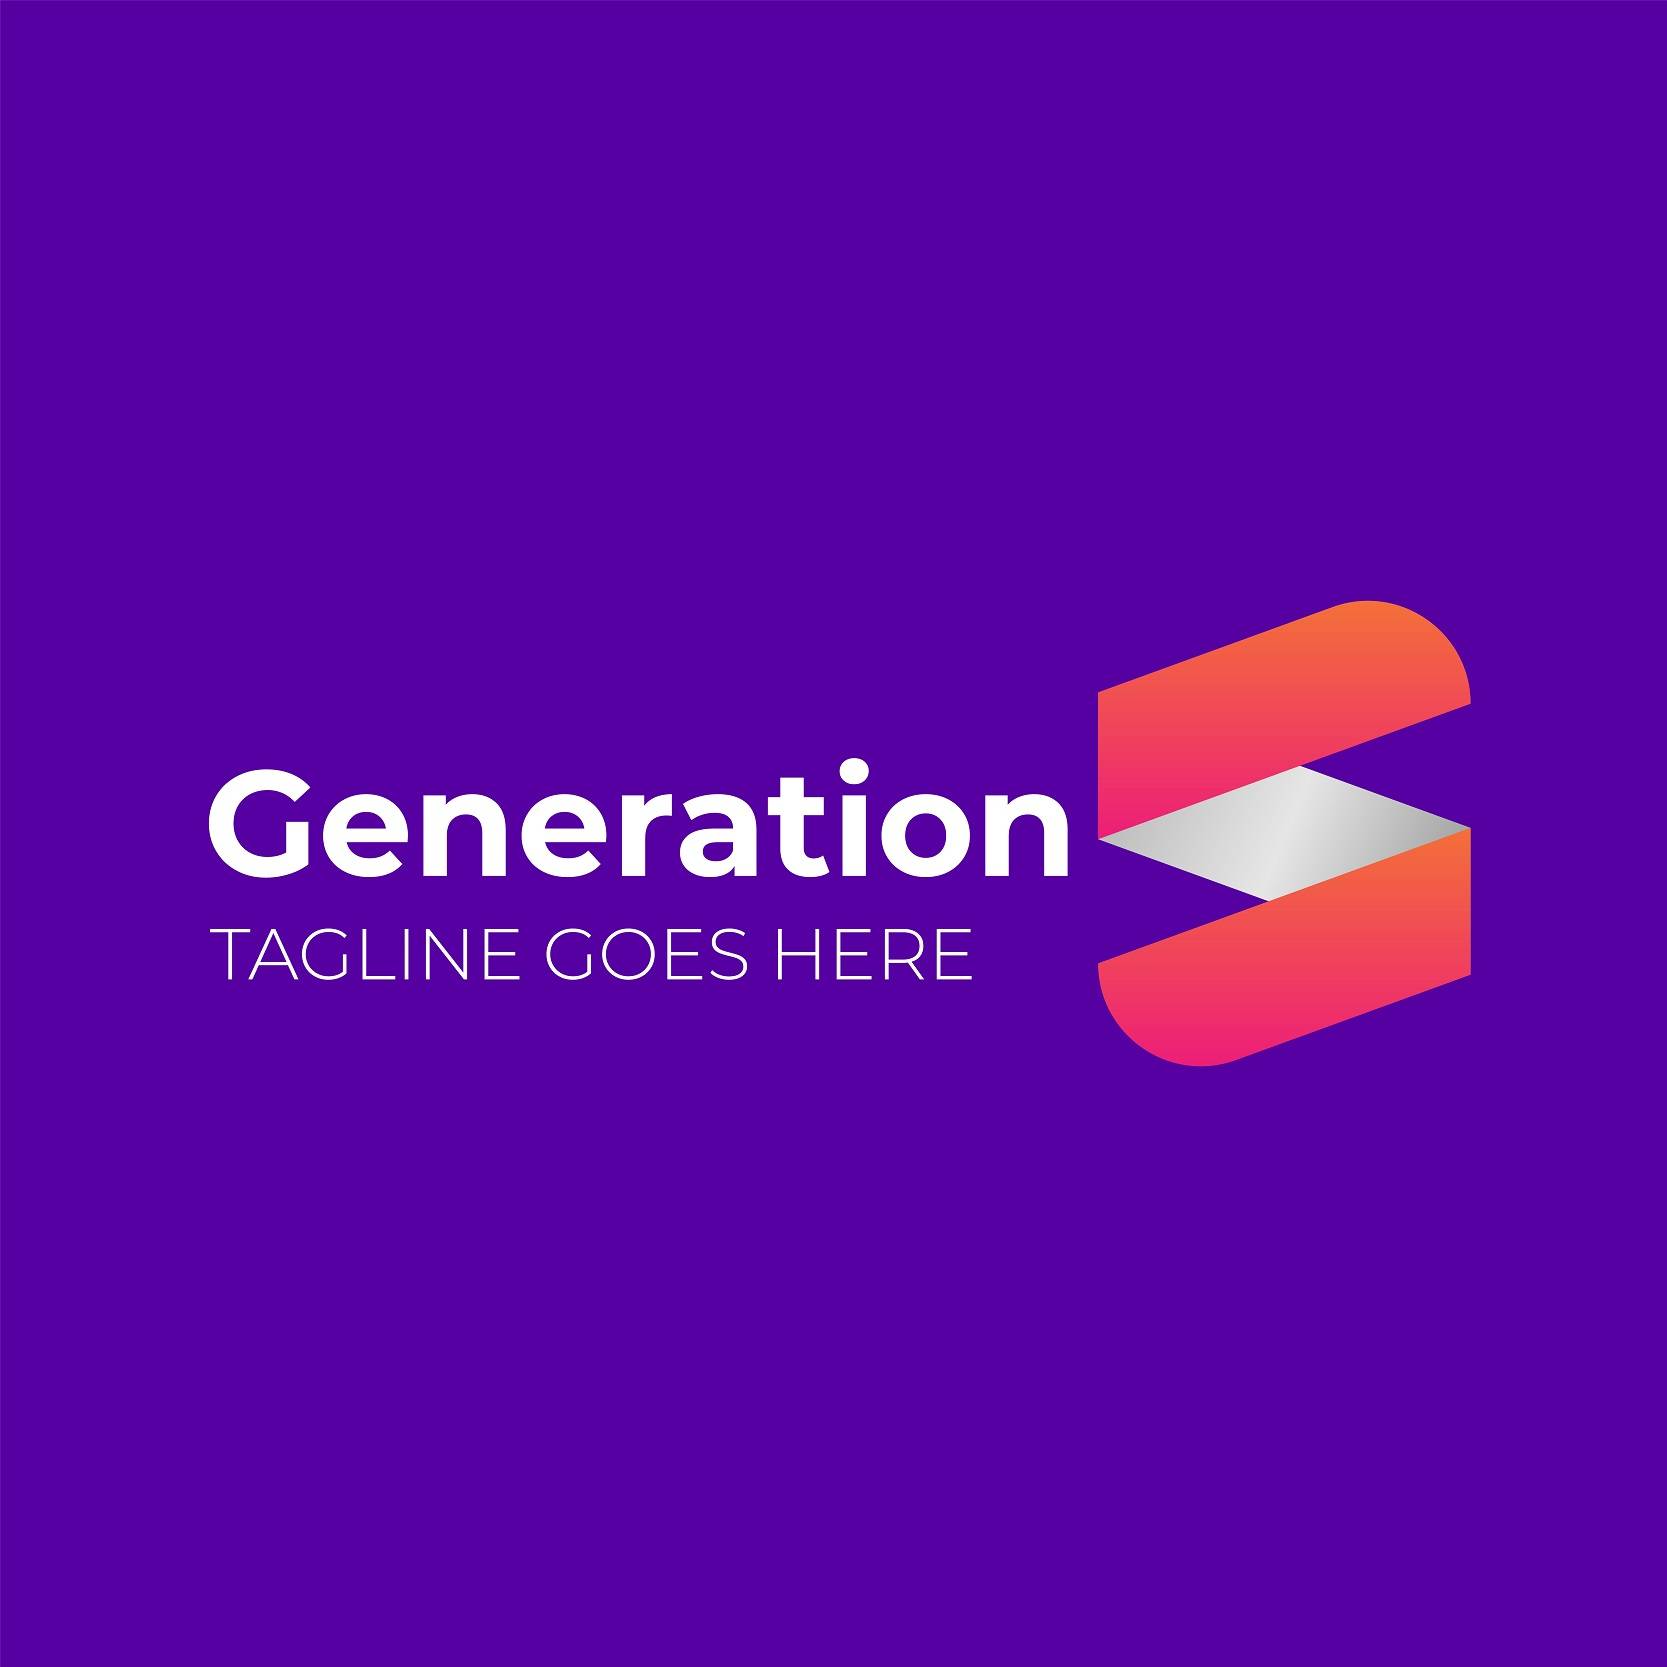 Generation logo with s shape